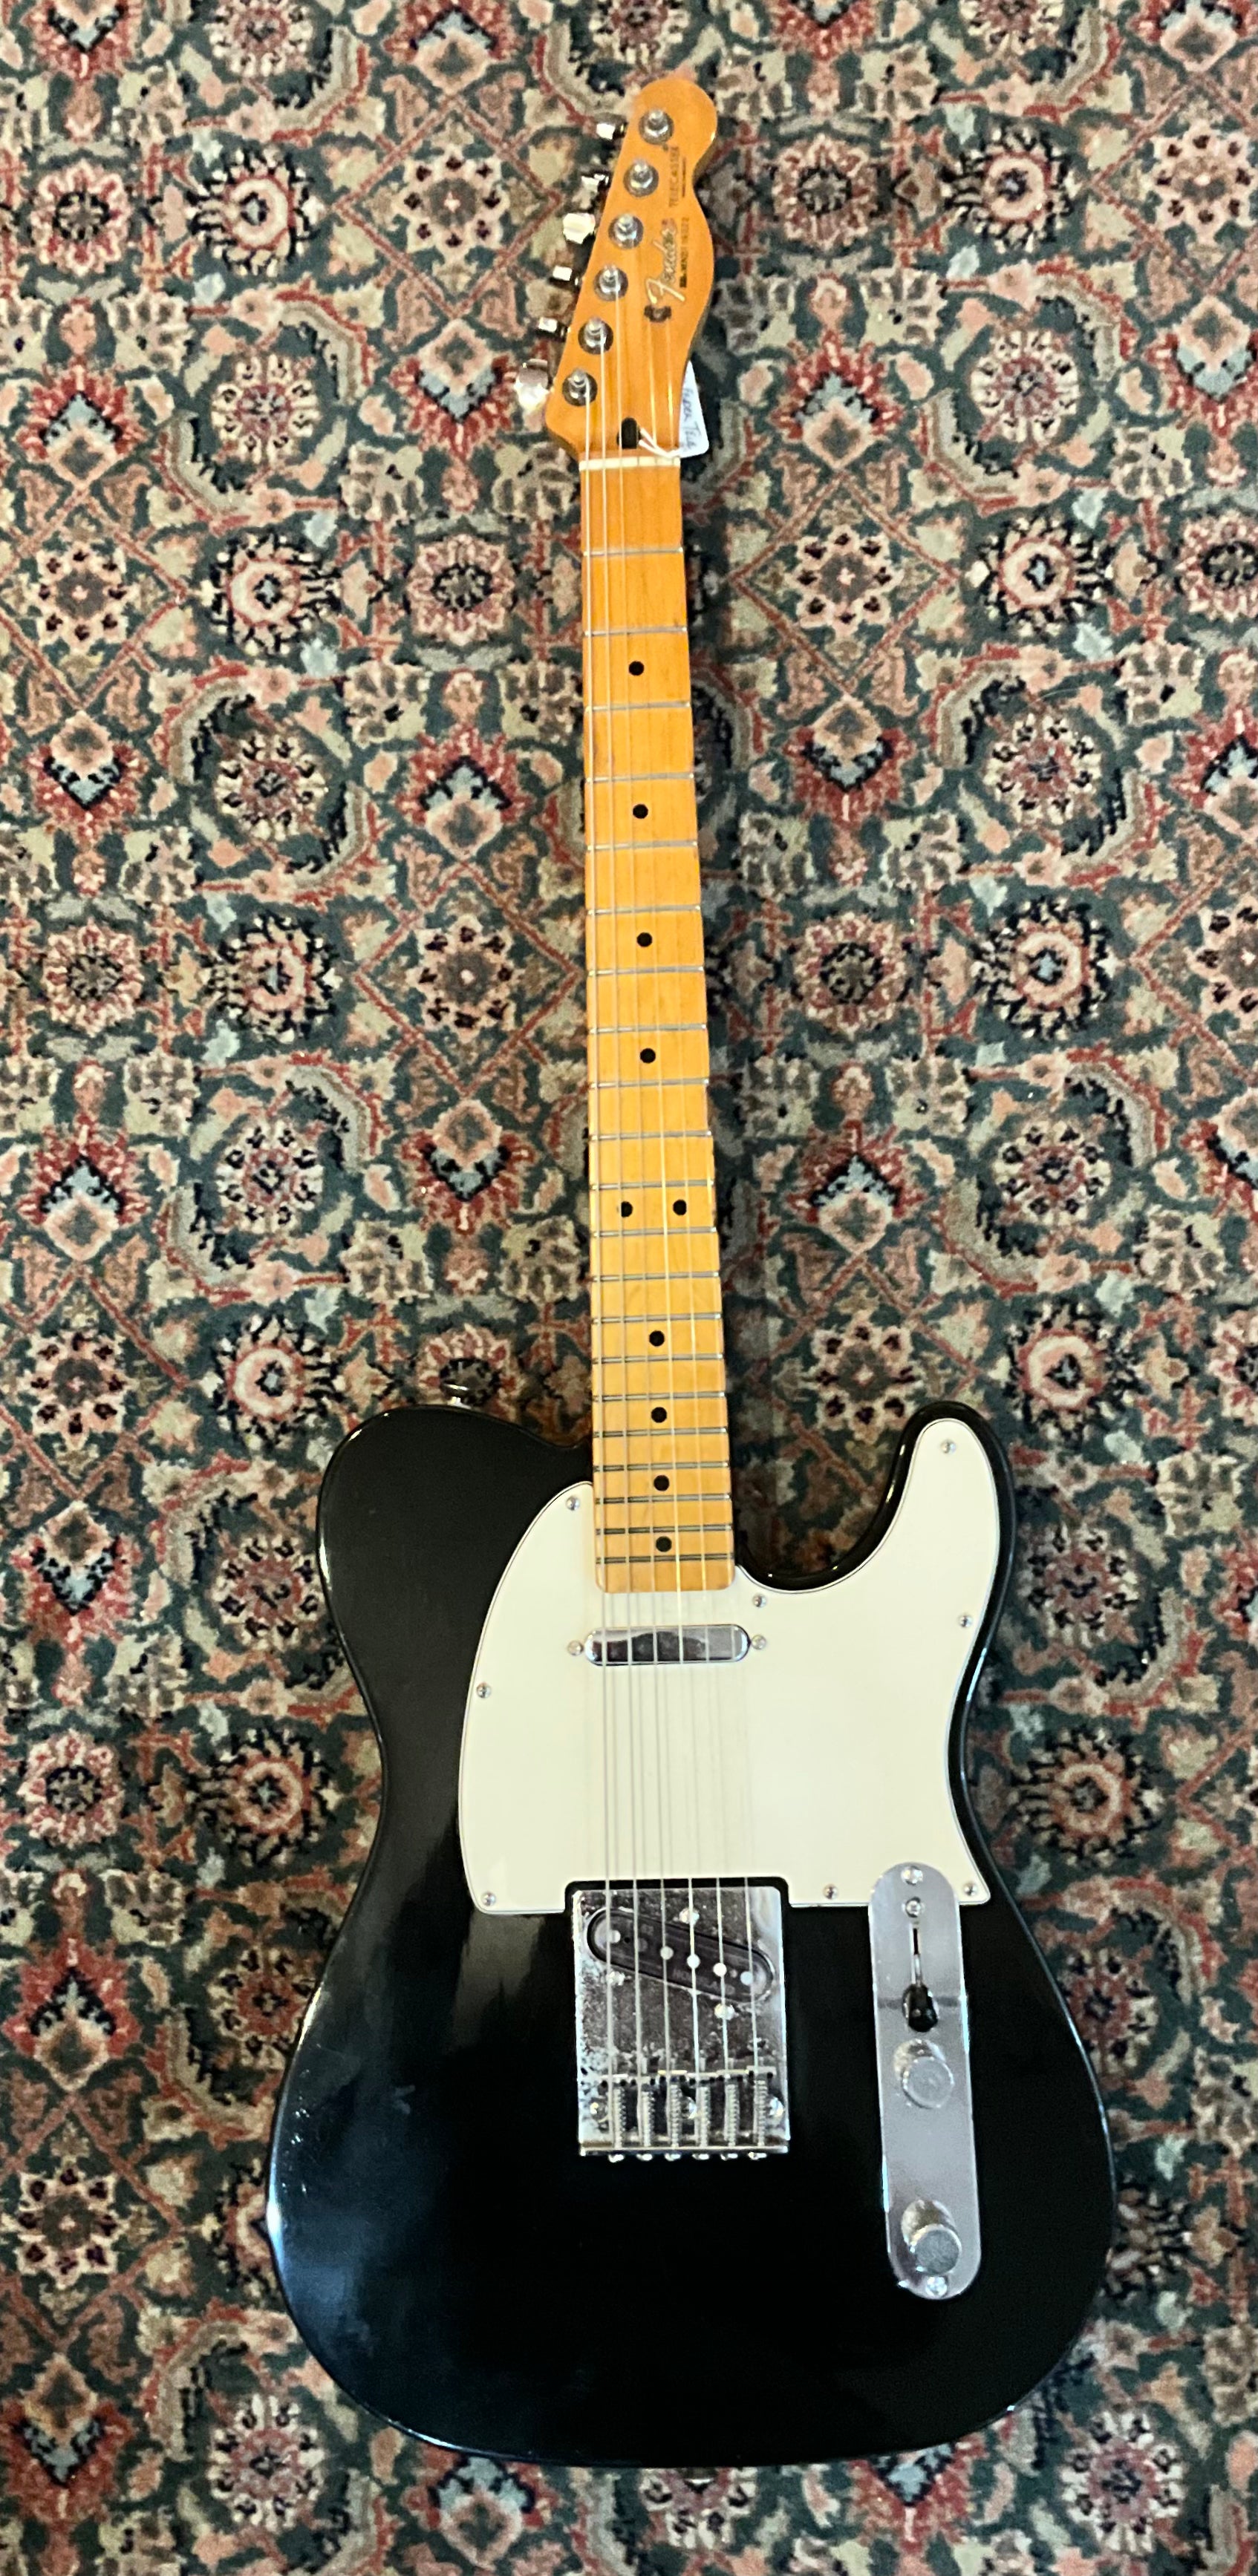 Made in Mexico Fender Telecaster – Galveston Guitar Lounge